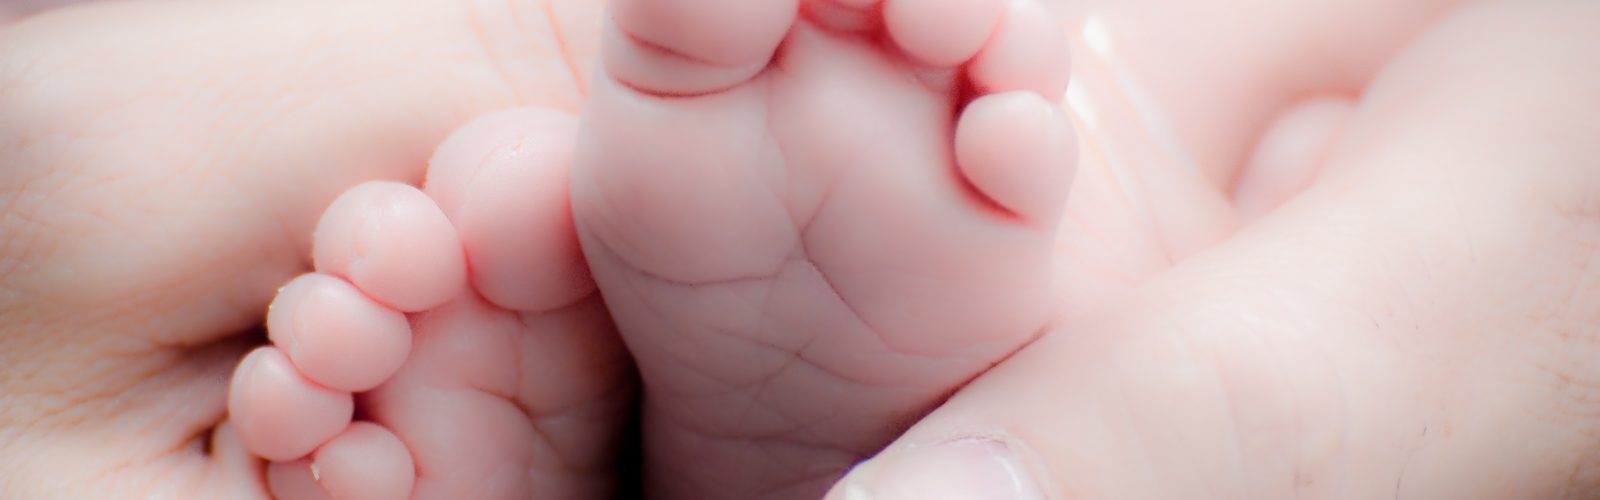 newborns healthy baby feet